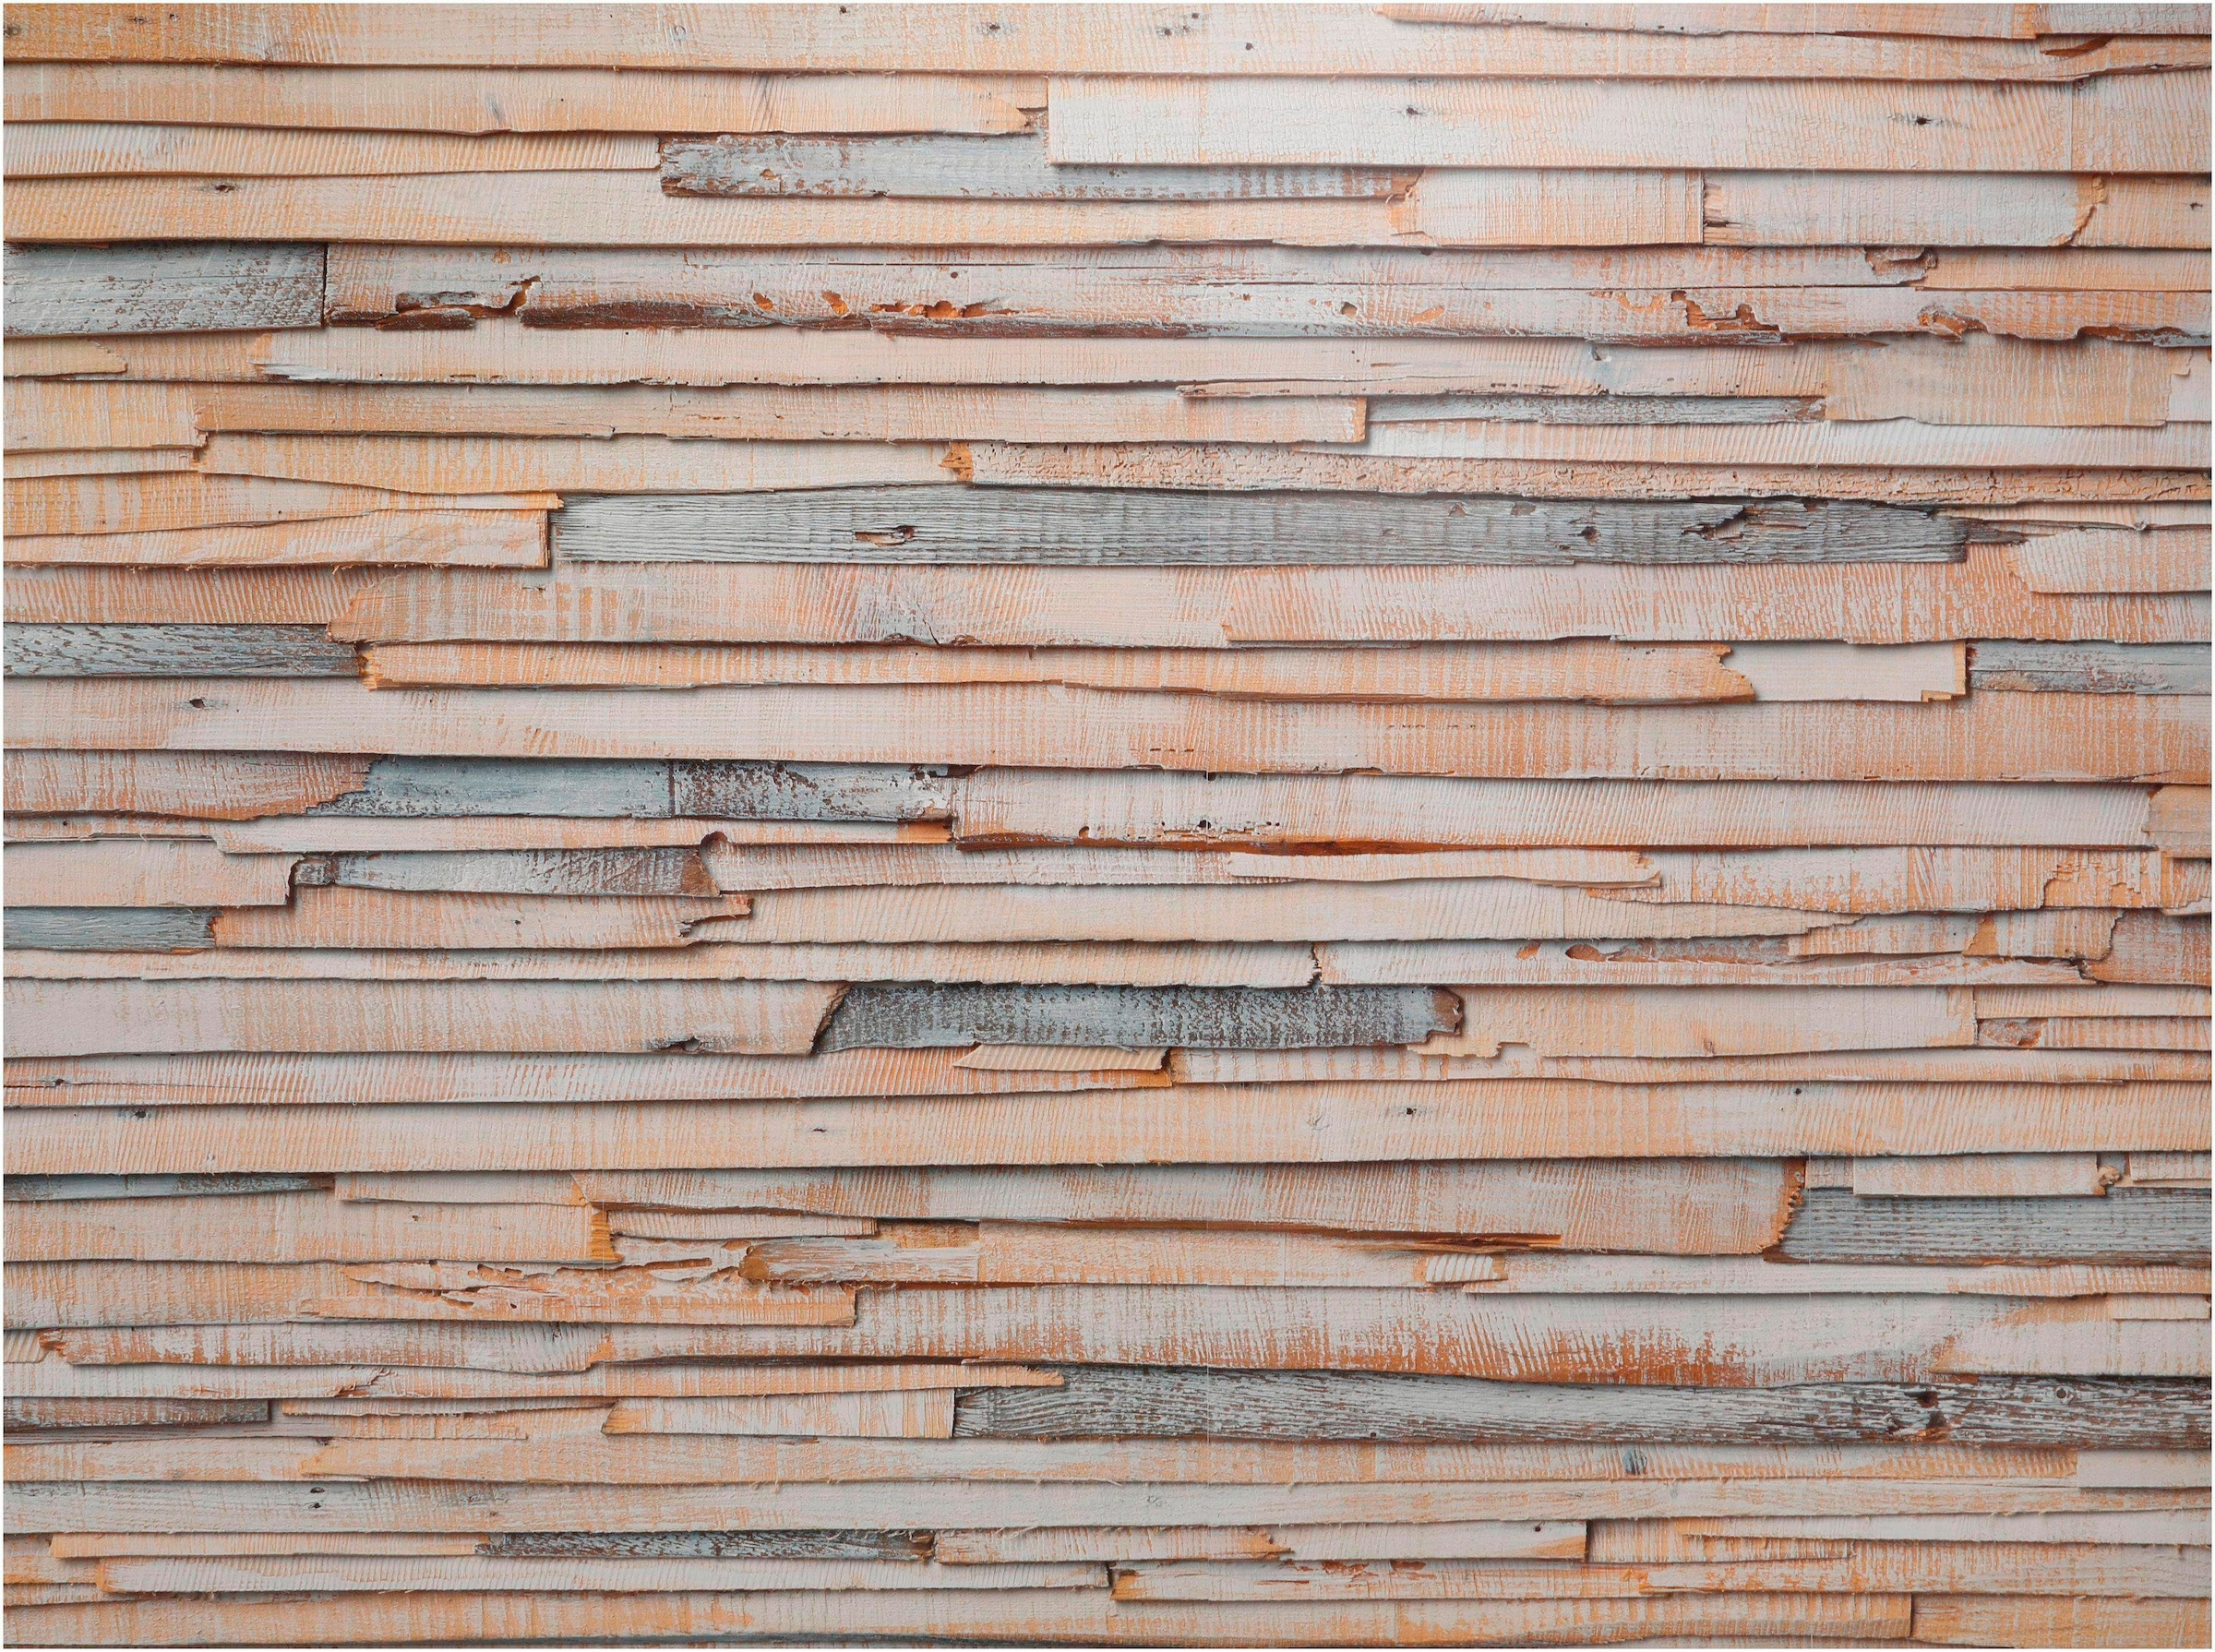 Fototapete »Whitewashed Wood«, 368x254 cm (Breite x Höhe), inklusive Kleister